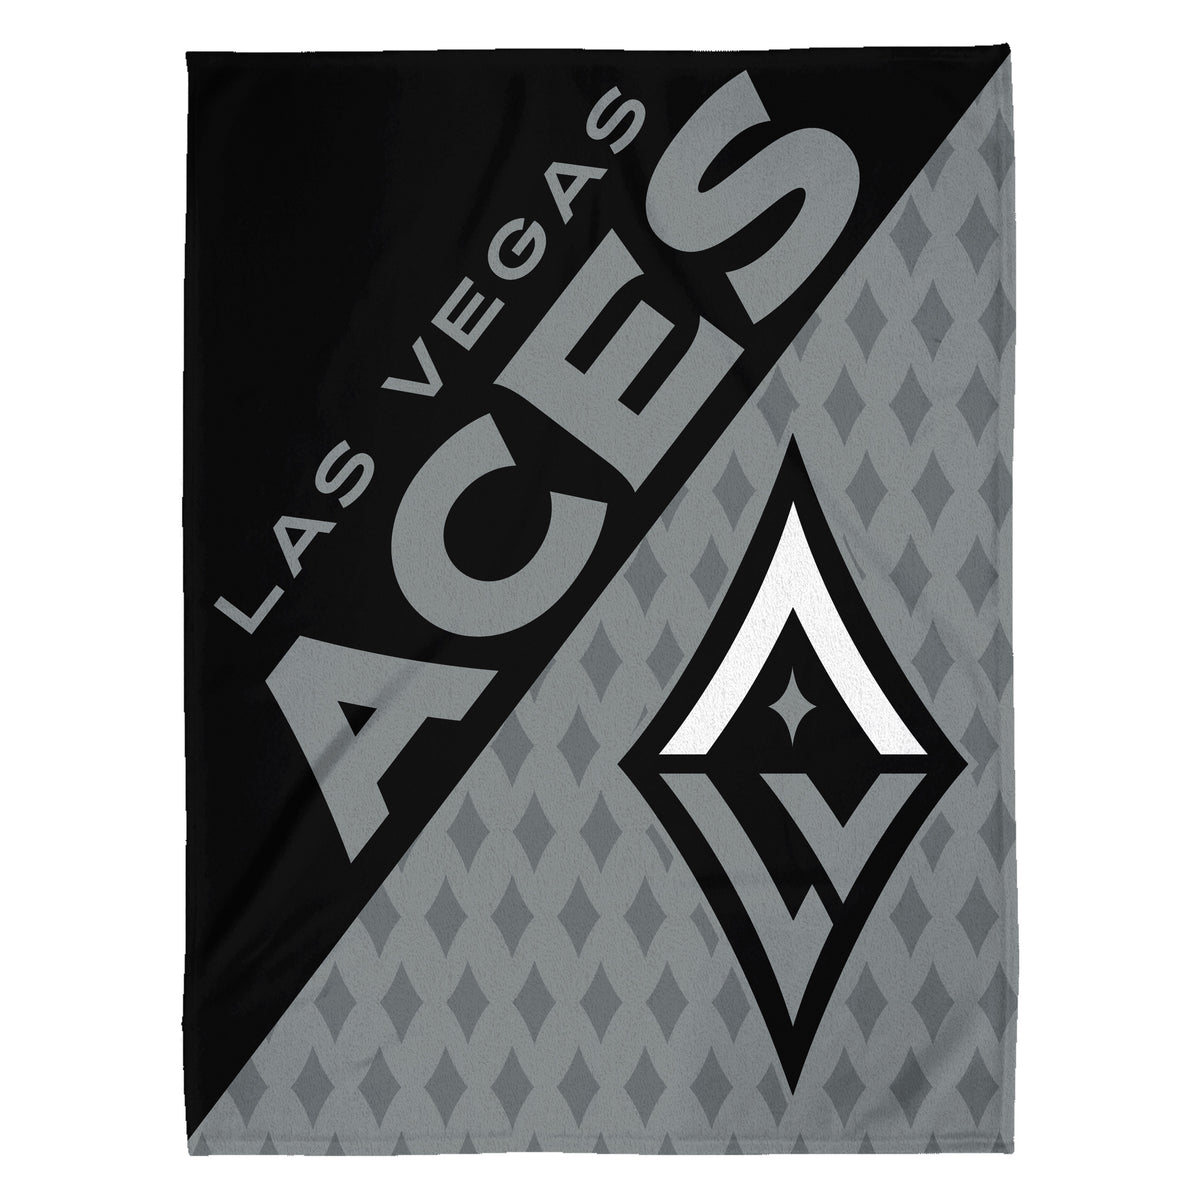 Las Vegas Aces Logo 60” x 80” Raschel Plush Blanket